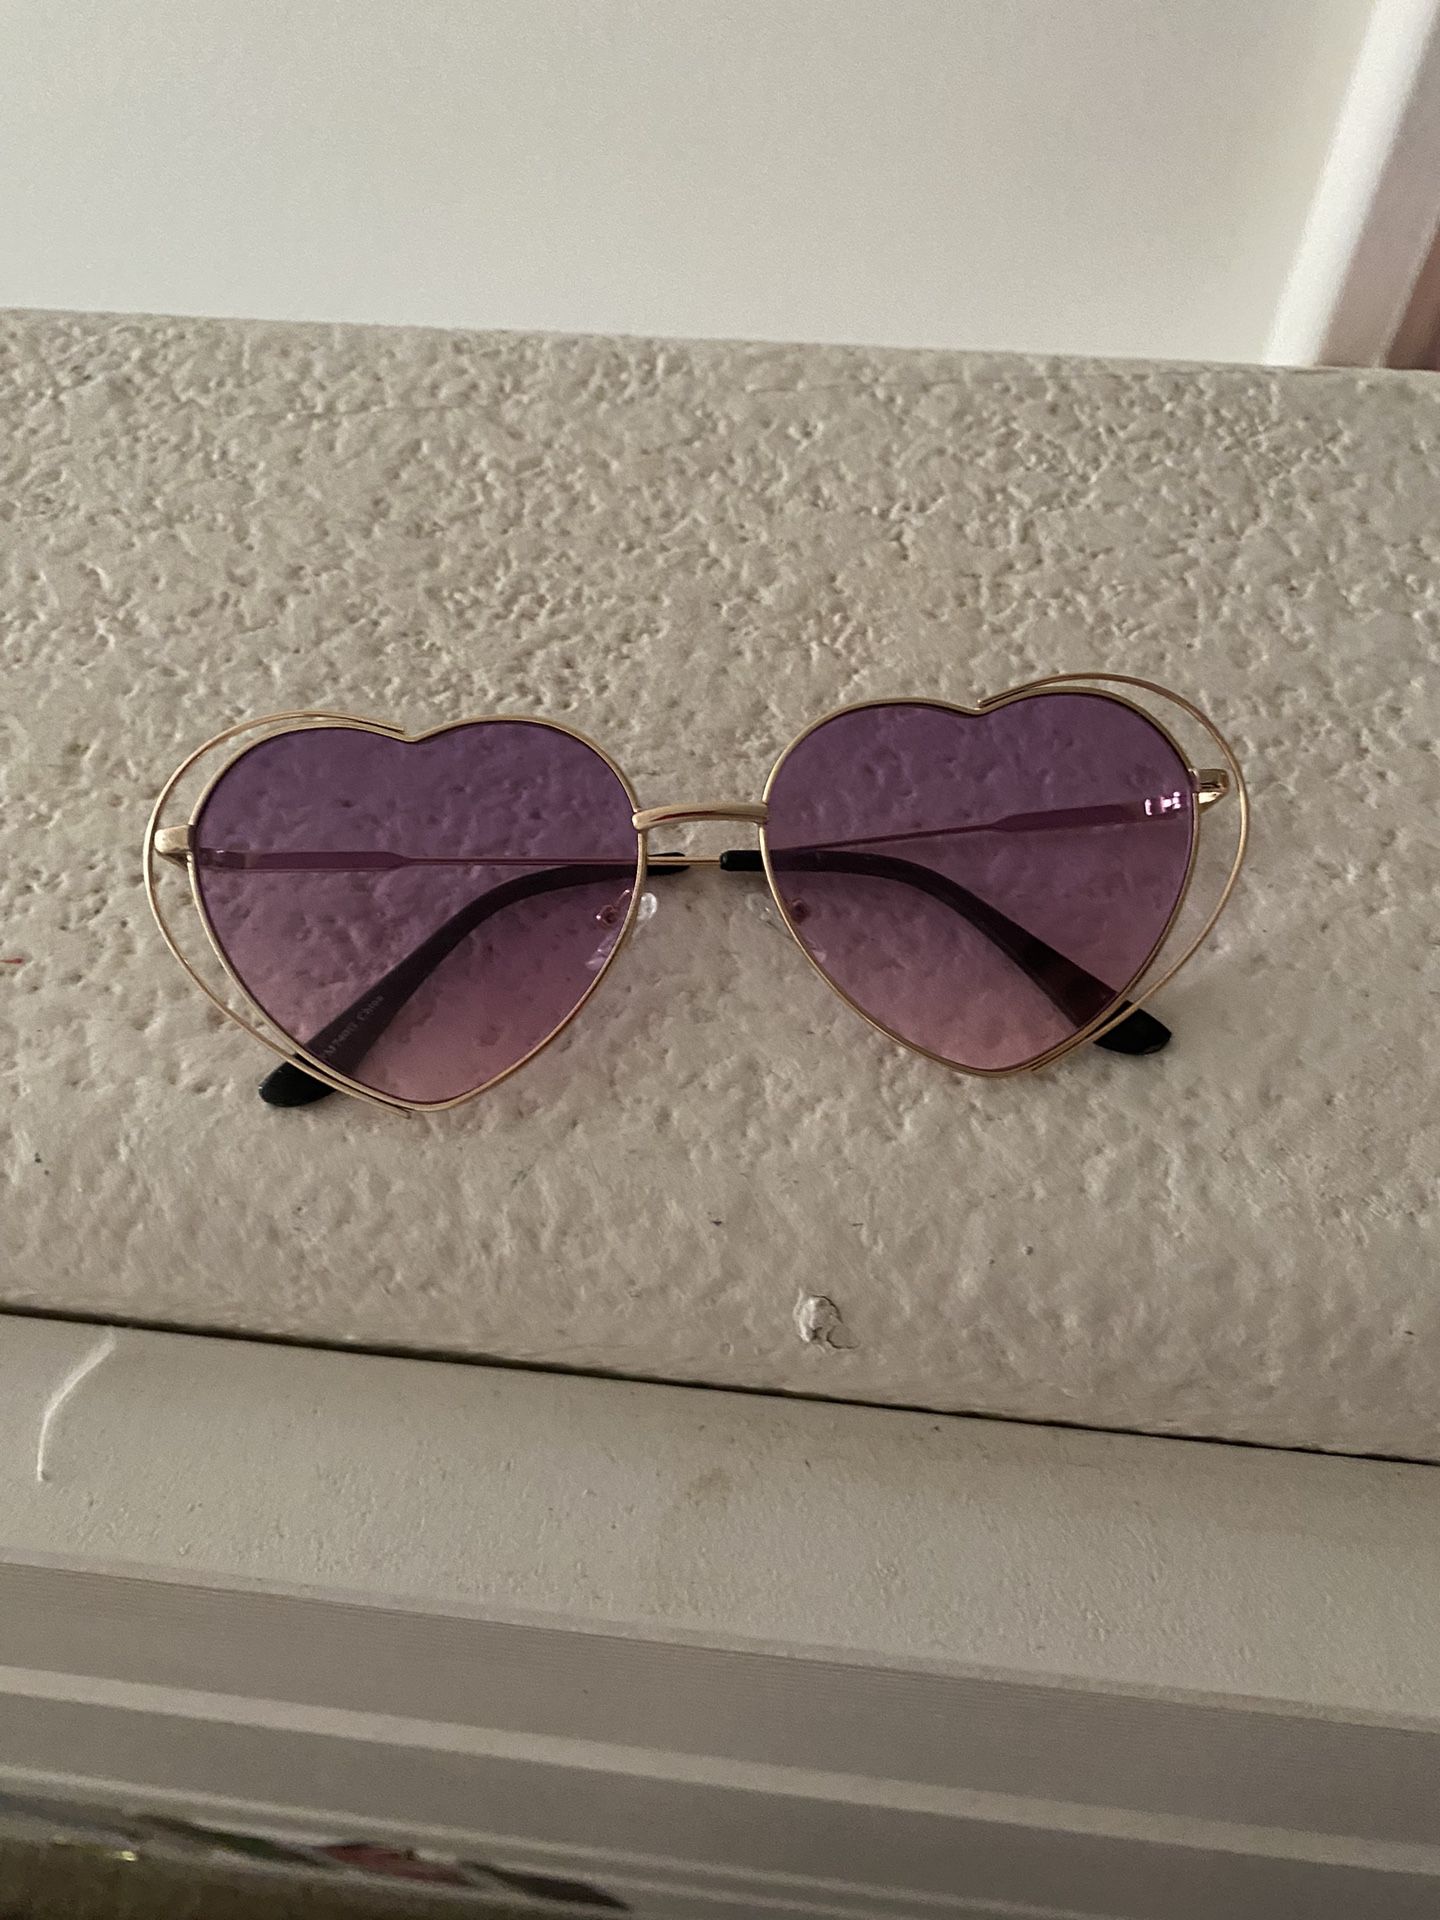 Purple Heart Shaped Sunglasses 